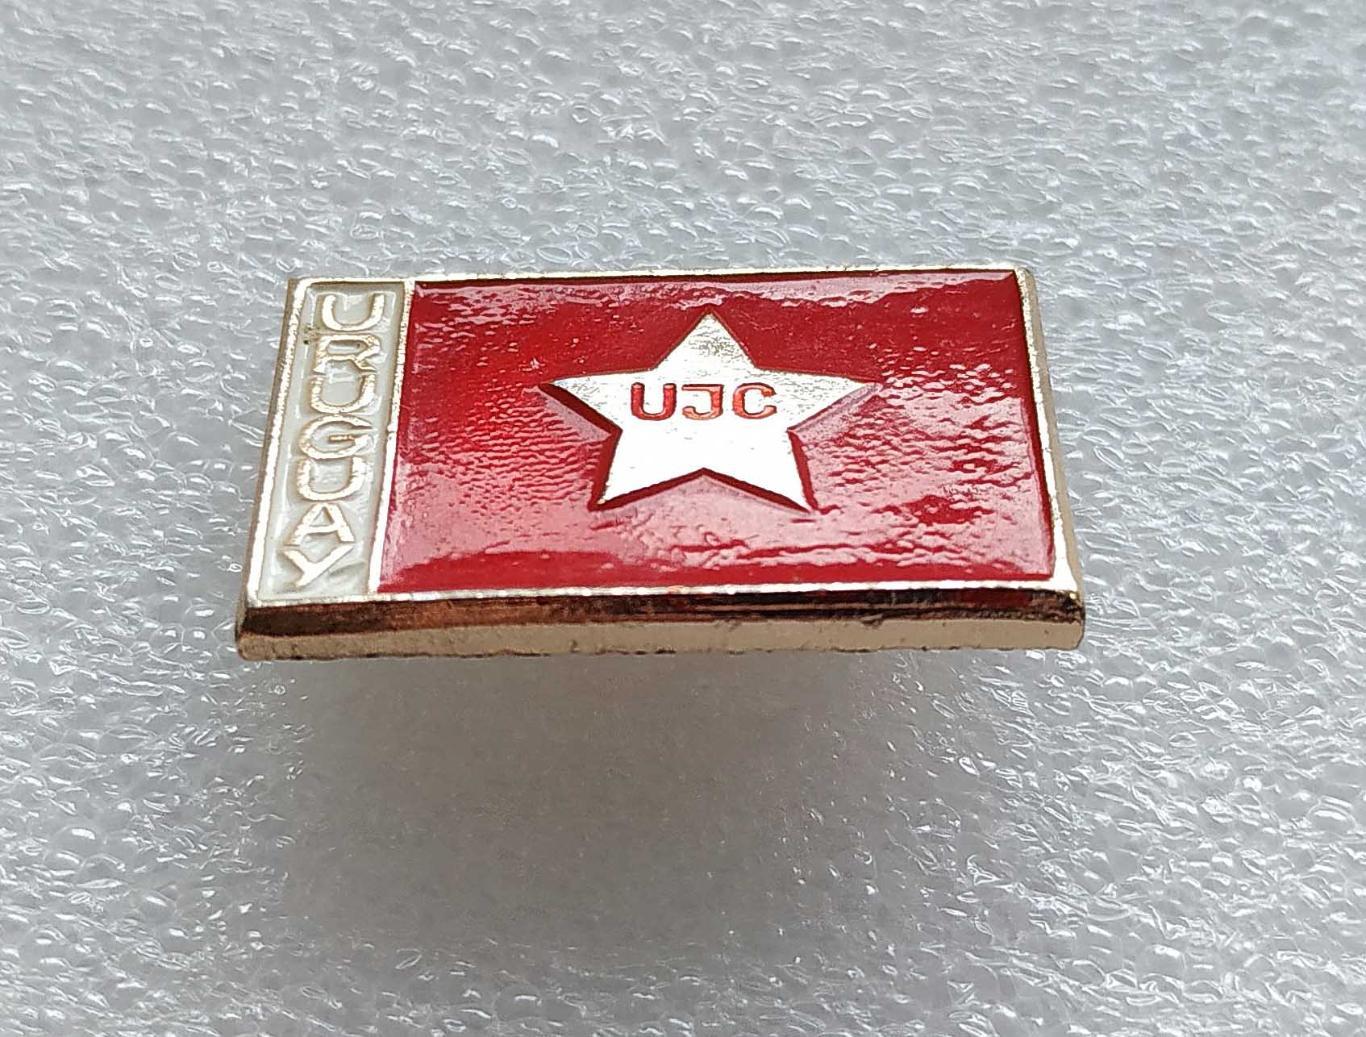 UJC-Союз коммунистической молодежи (Уругвай)__комсомол_UJC Uruguay_РЕДКИЙ 1